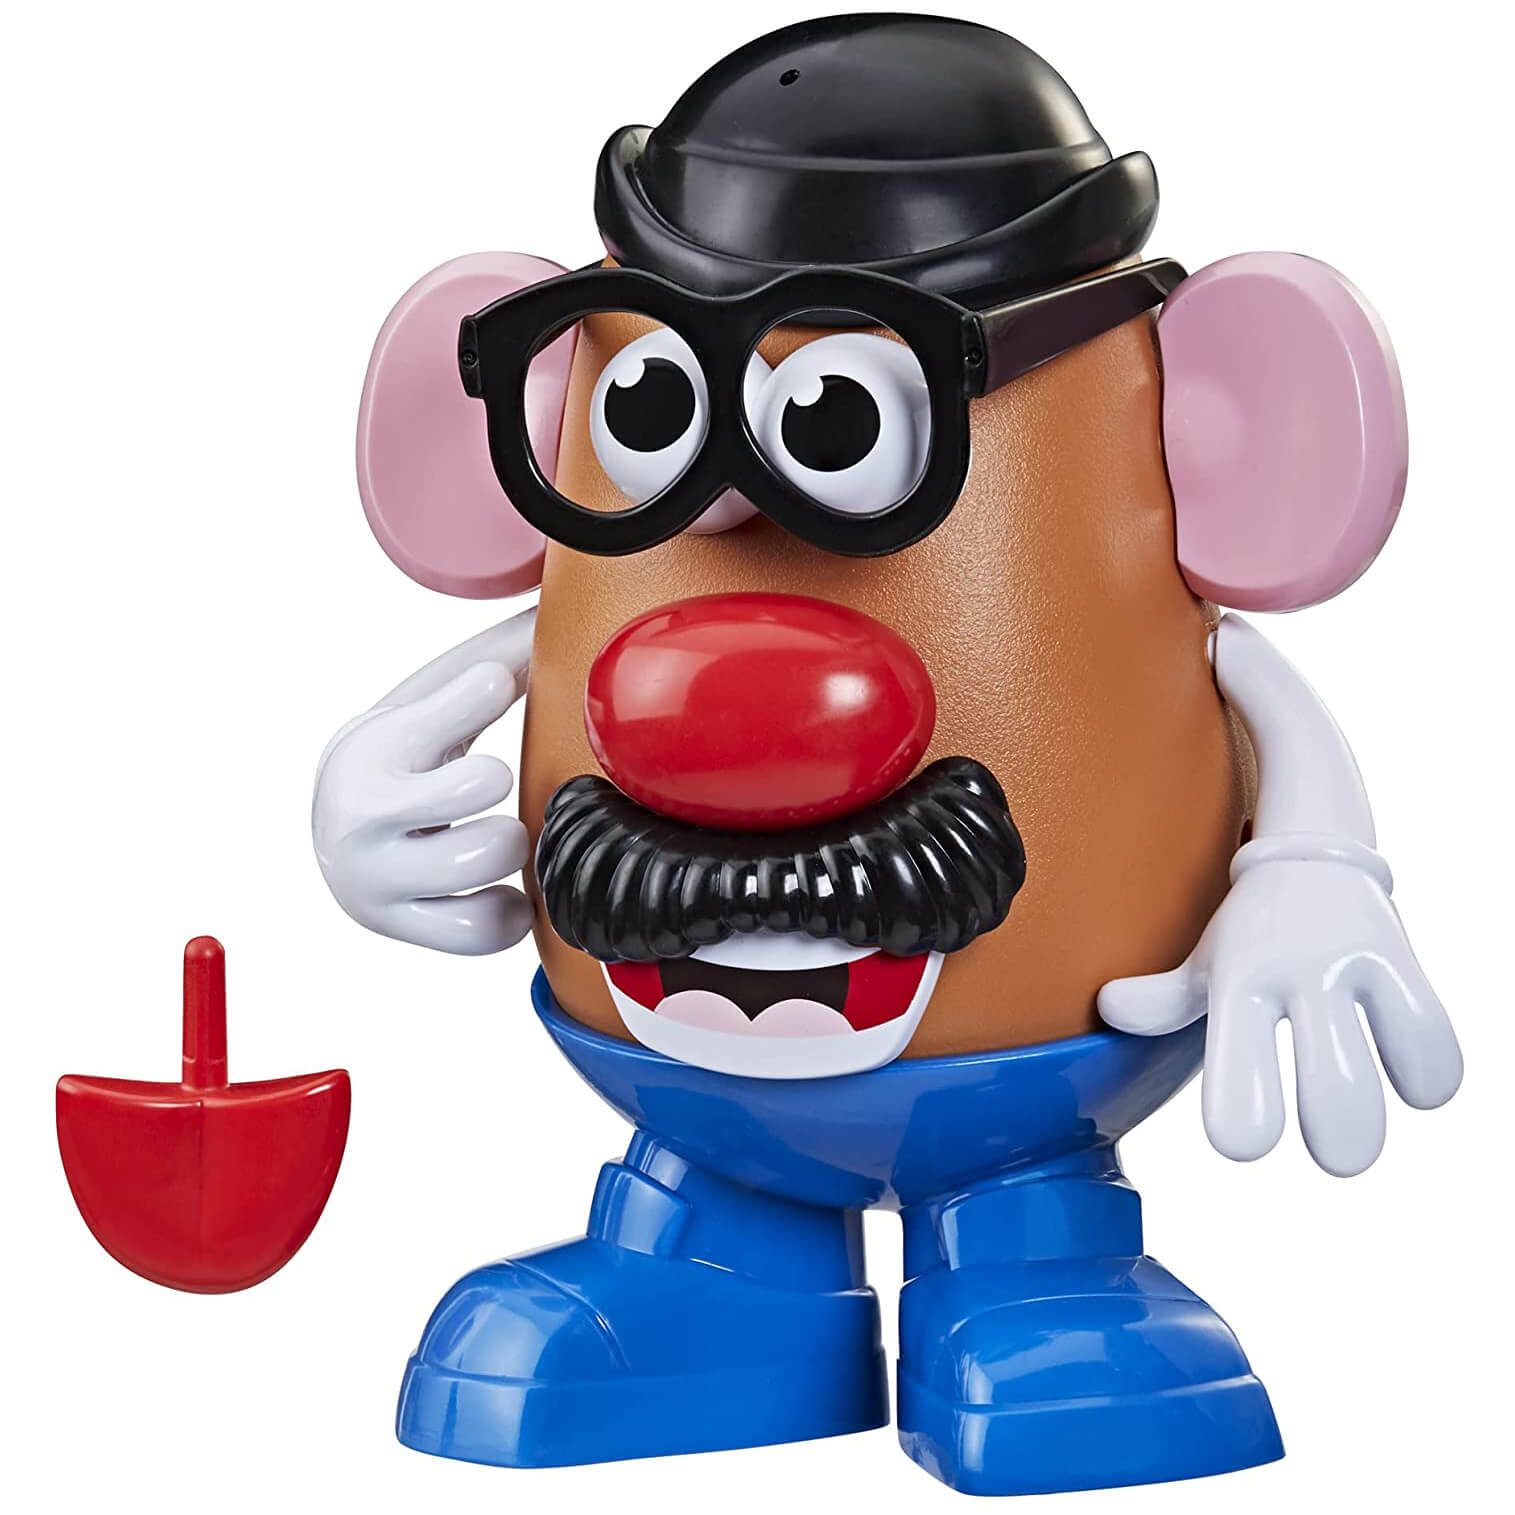 Mr. Potato Head 13 Piece Set